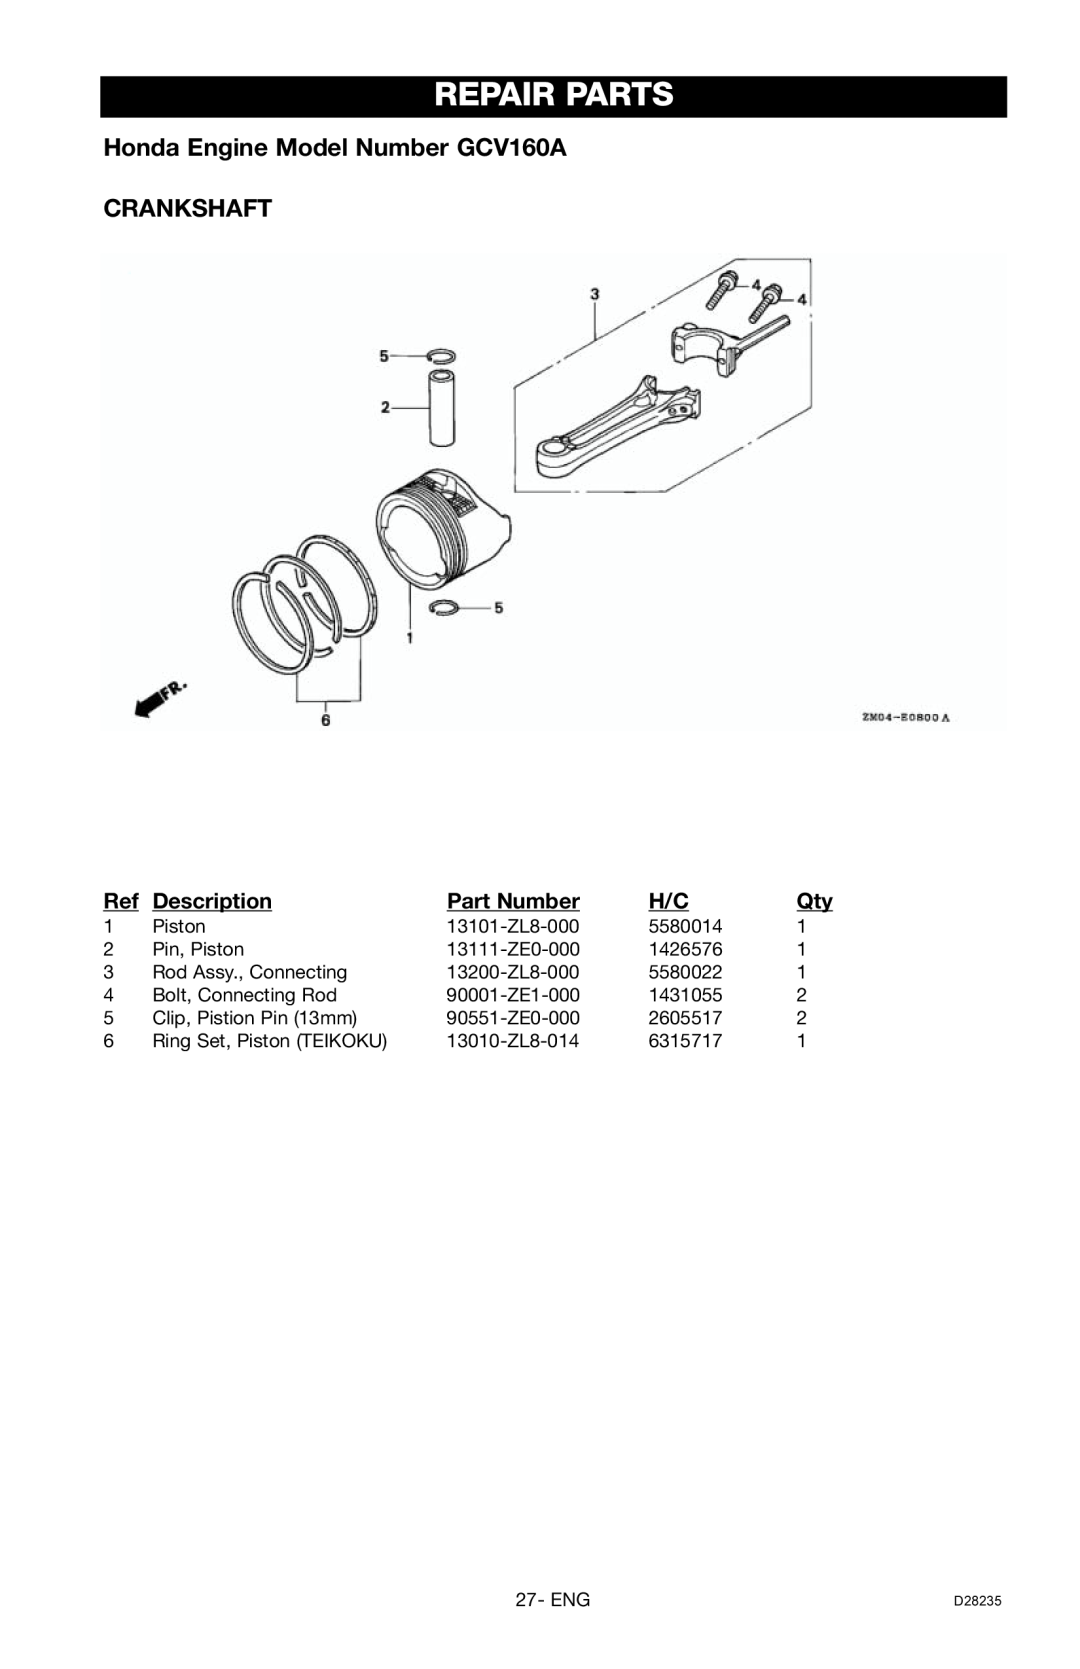 Craftsman 919.672241, D28235 owner manual Repair Parts, Description, Part Number, Piston 